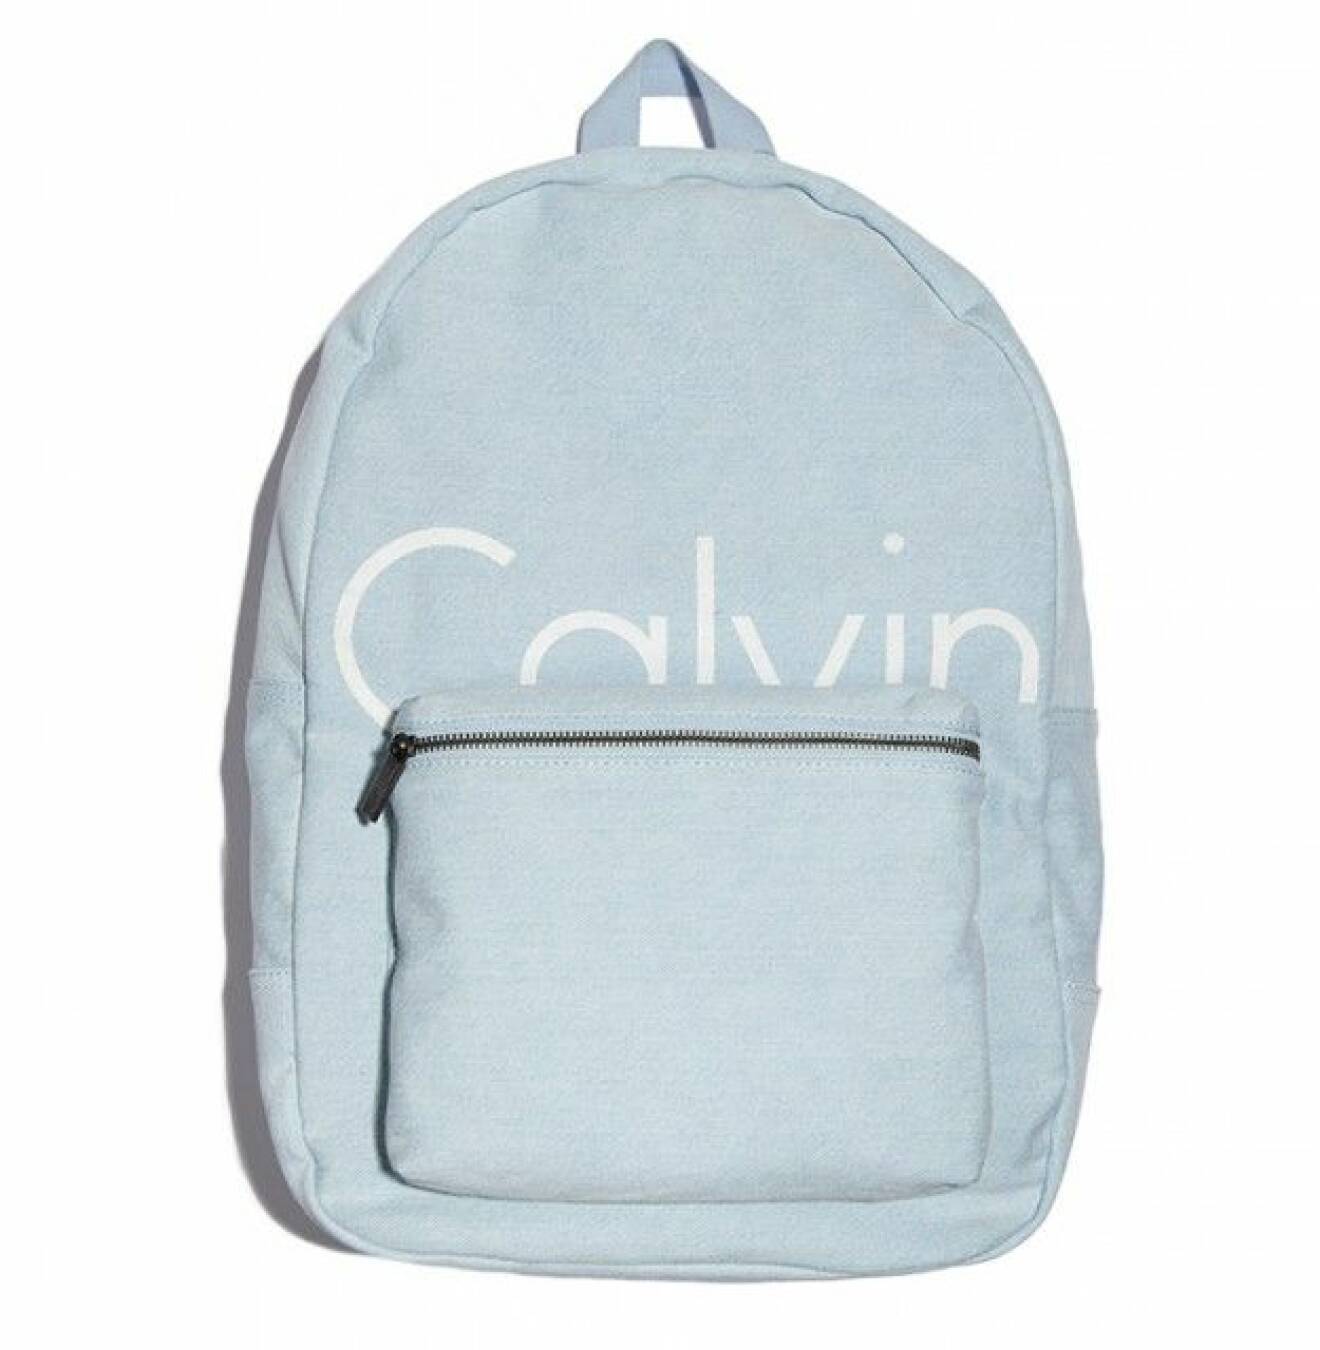 calvin-klein-jeans-s15-mycalvins-denim-series_ph_courtesy_My-Calvins-unisex-backpack-inc-03.SEK1300-626x640